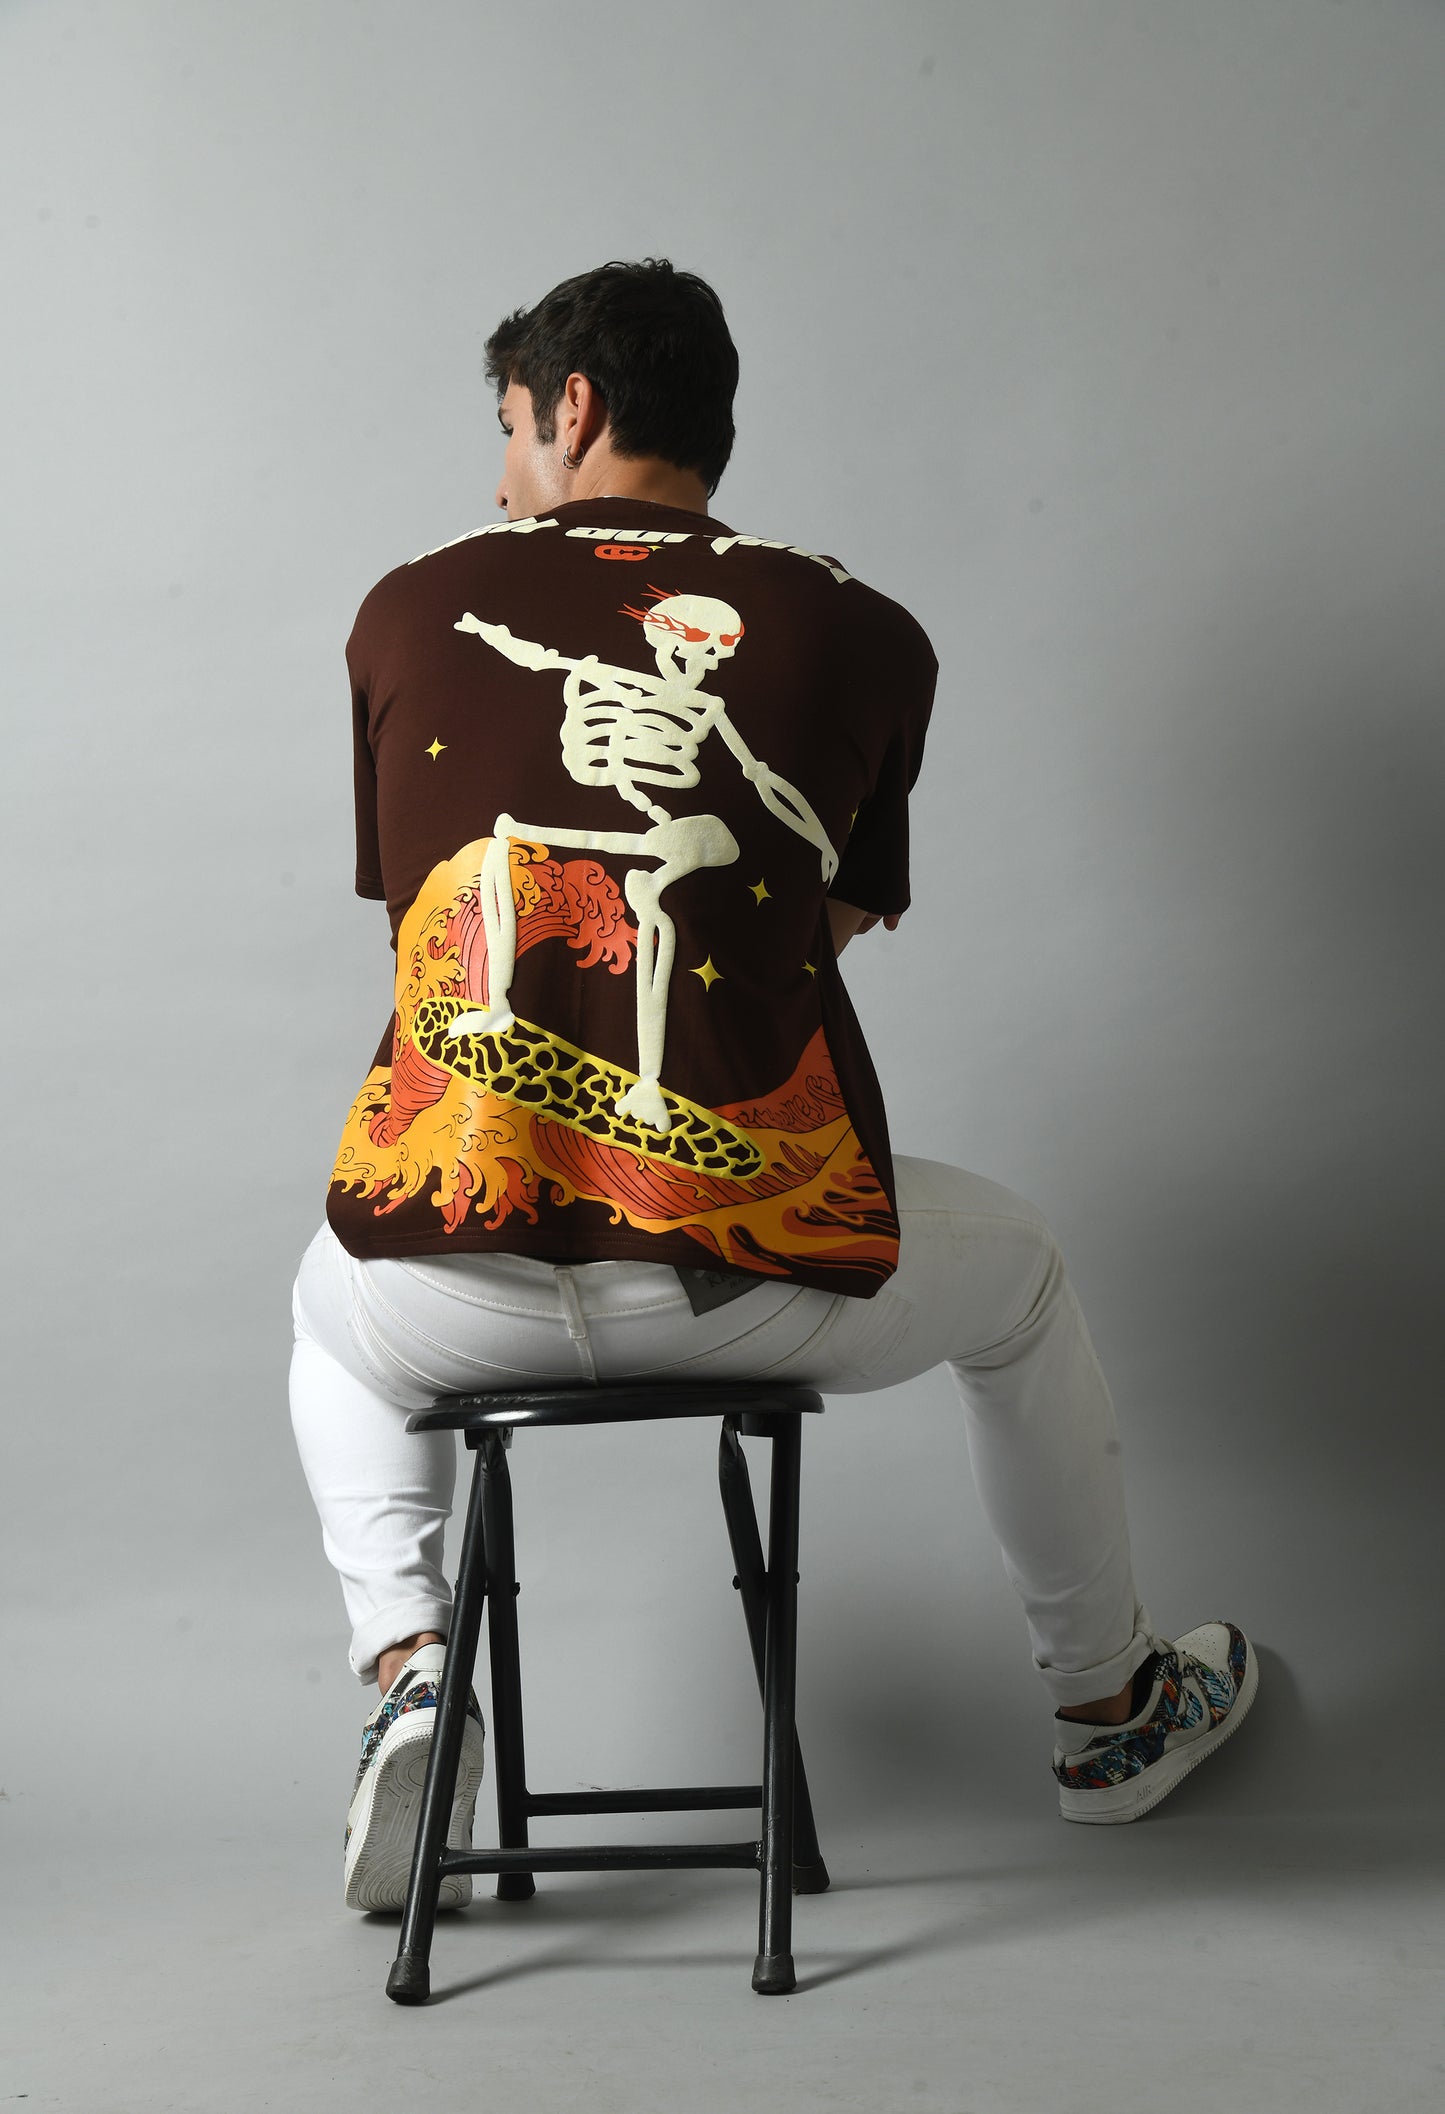 Brown Hell Surfer Unisex T-Shirt